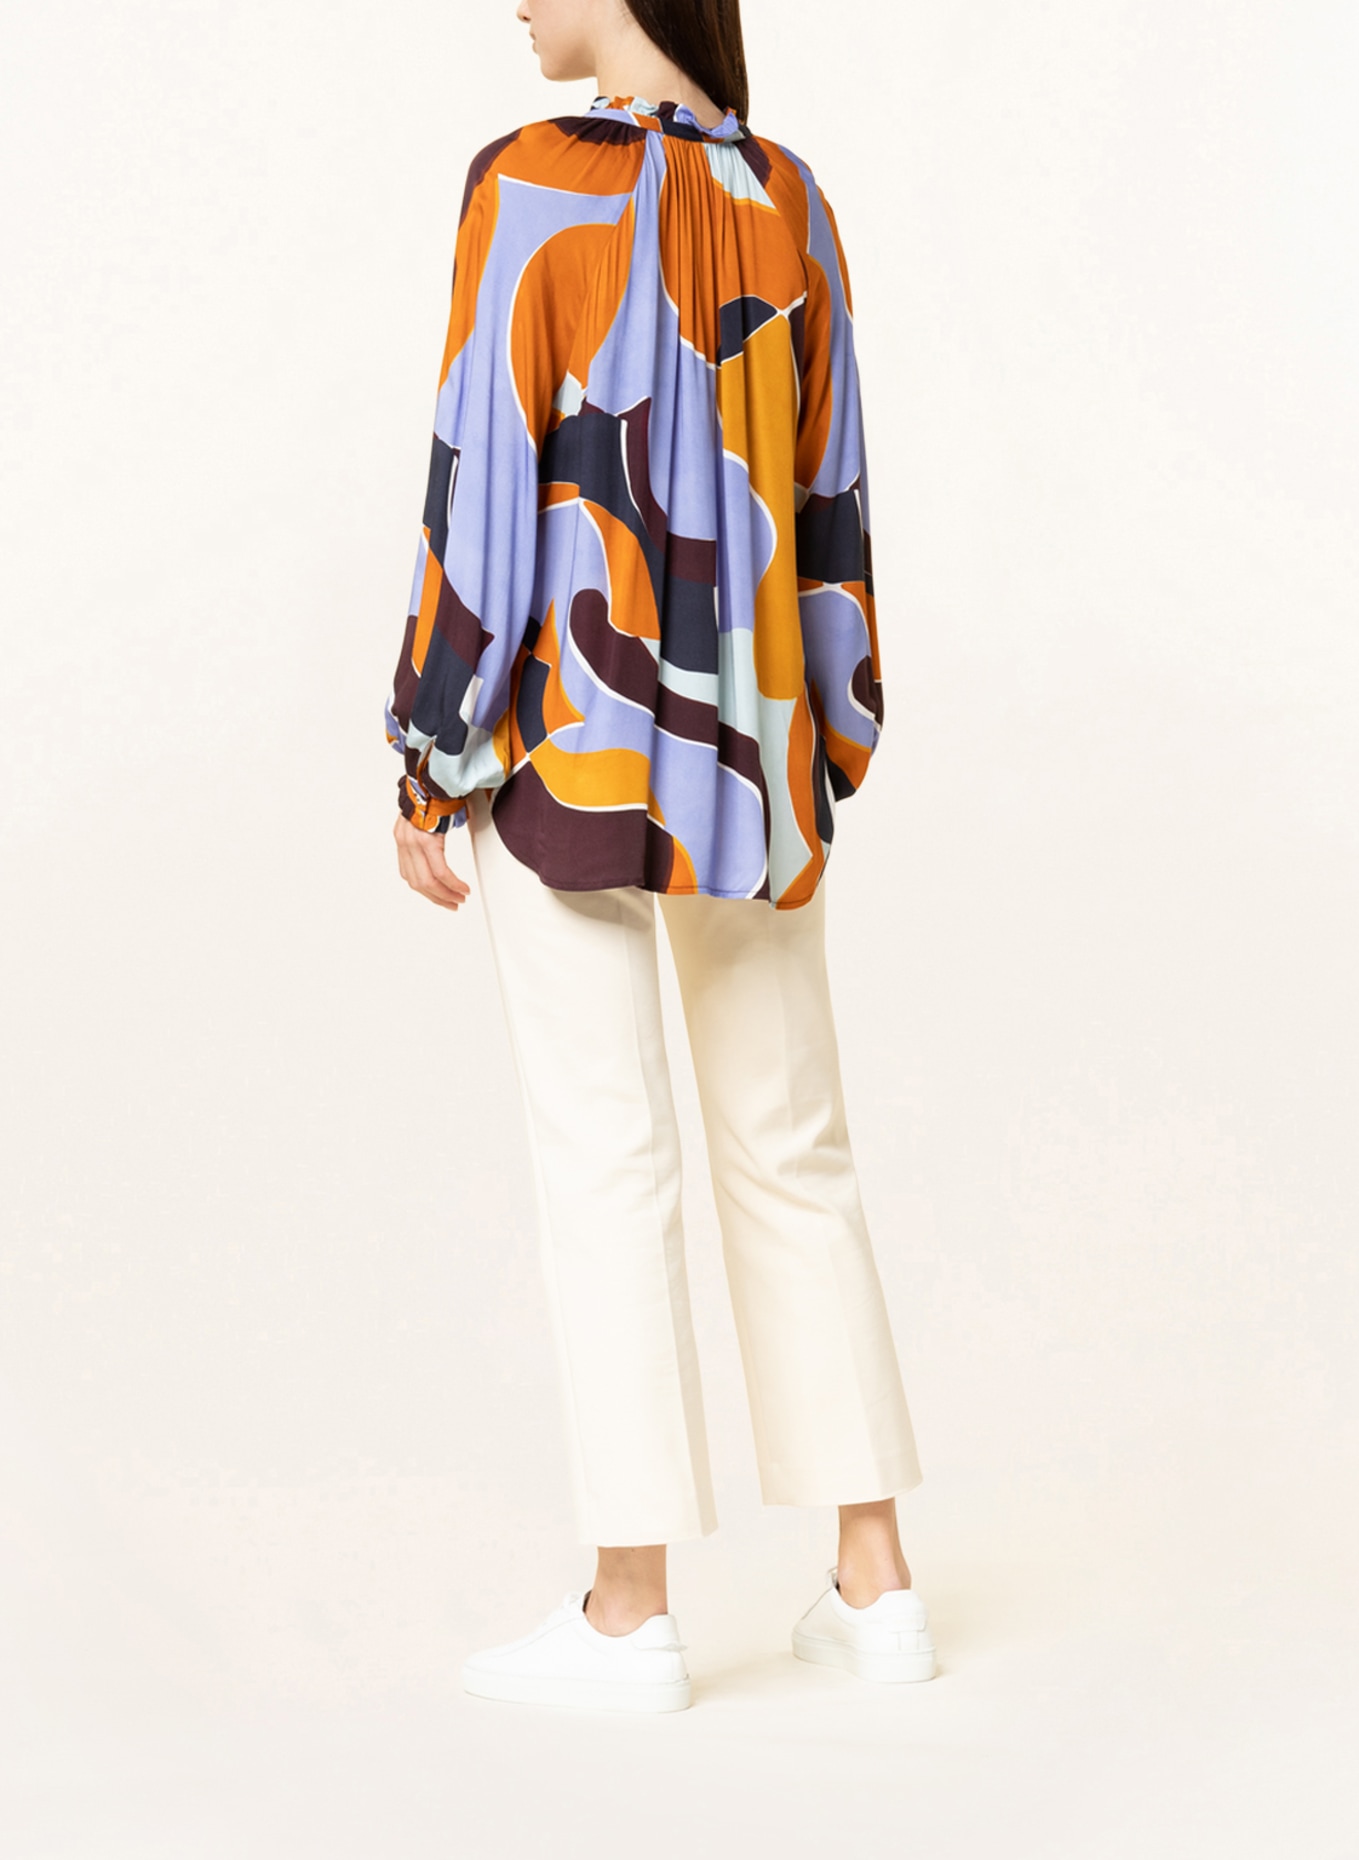 TONNO & PANNA Blouse-style shirt HERMINE with ruffles, Color: DARK BROWN/ LIGHT BLUE/ ORANGE (Image 3)